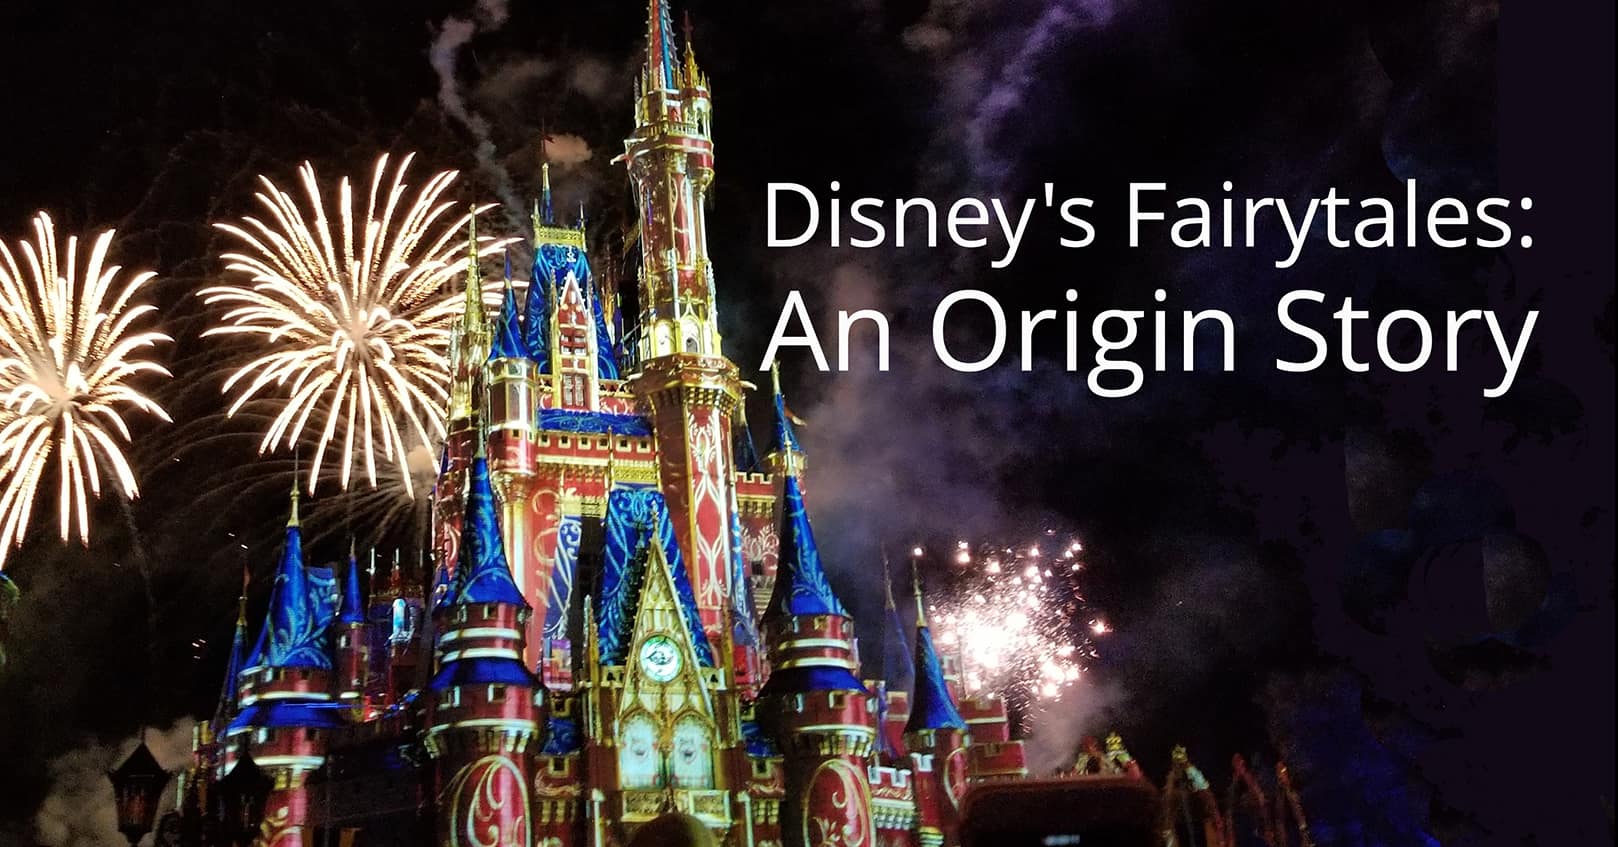 Disney's Fairytales - fairytale retellings